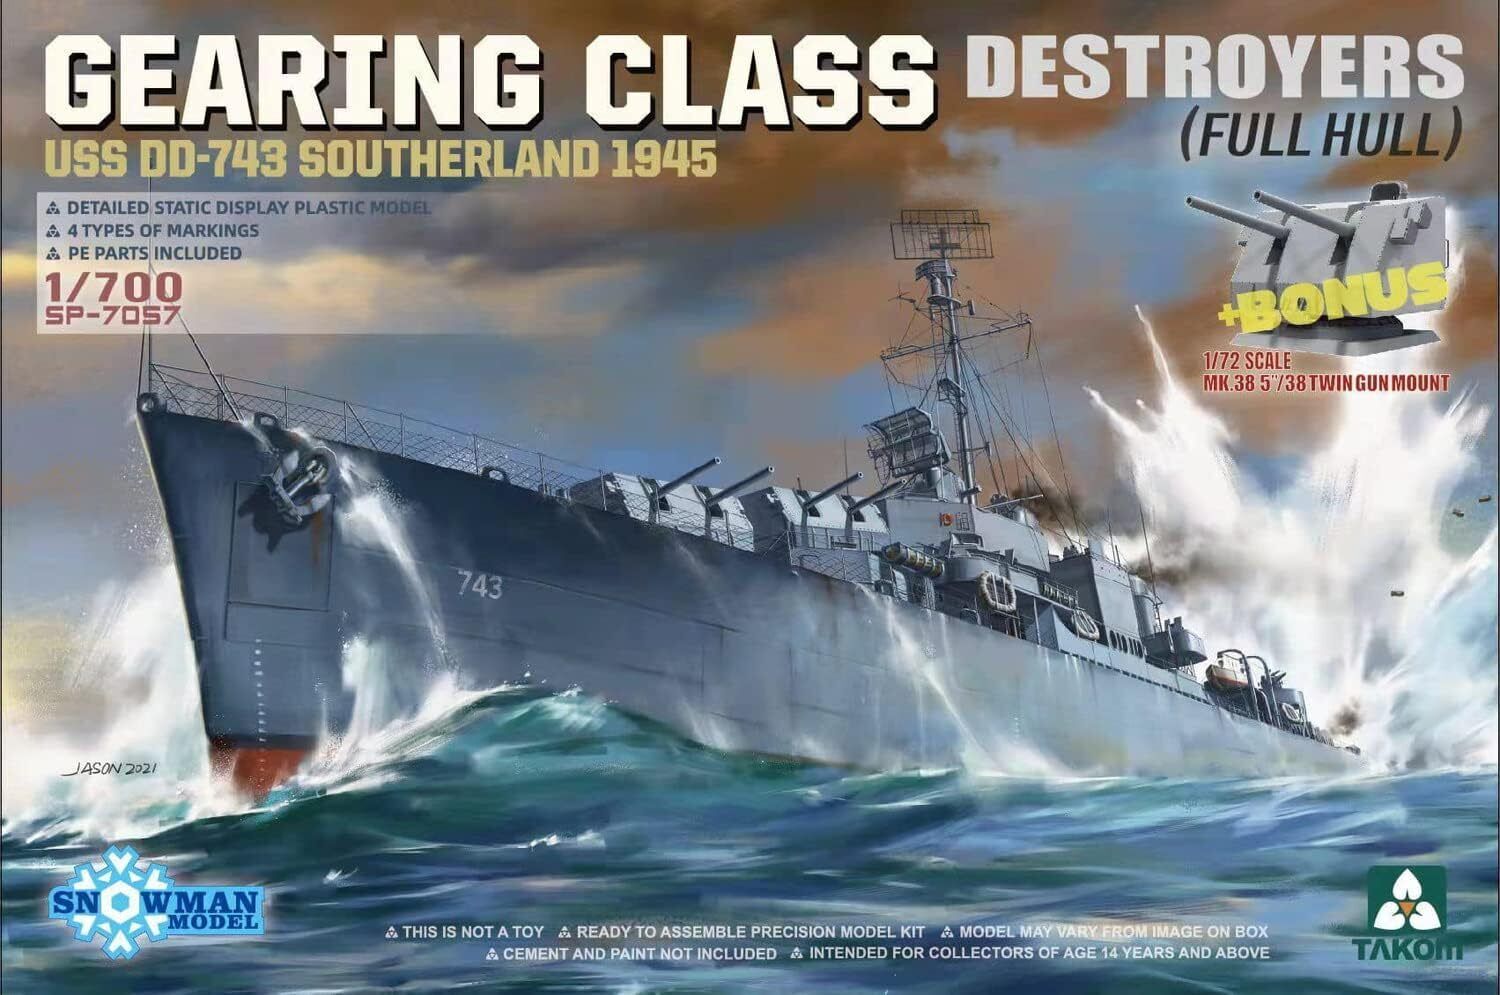 Gearing Class Destroyer USS DD-743 Southerland 1945 Ship Model kit TKOSP-7057